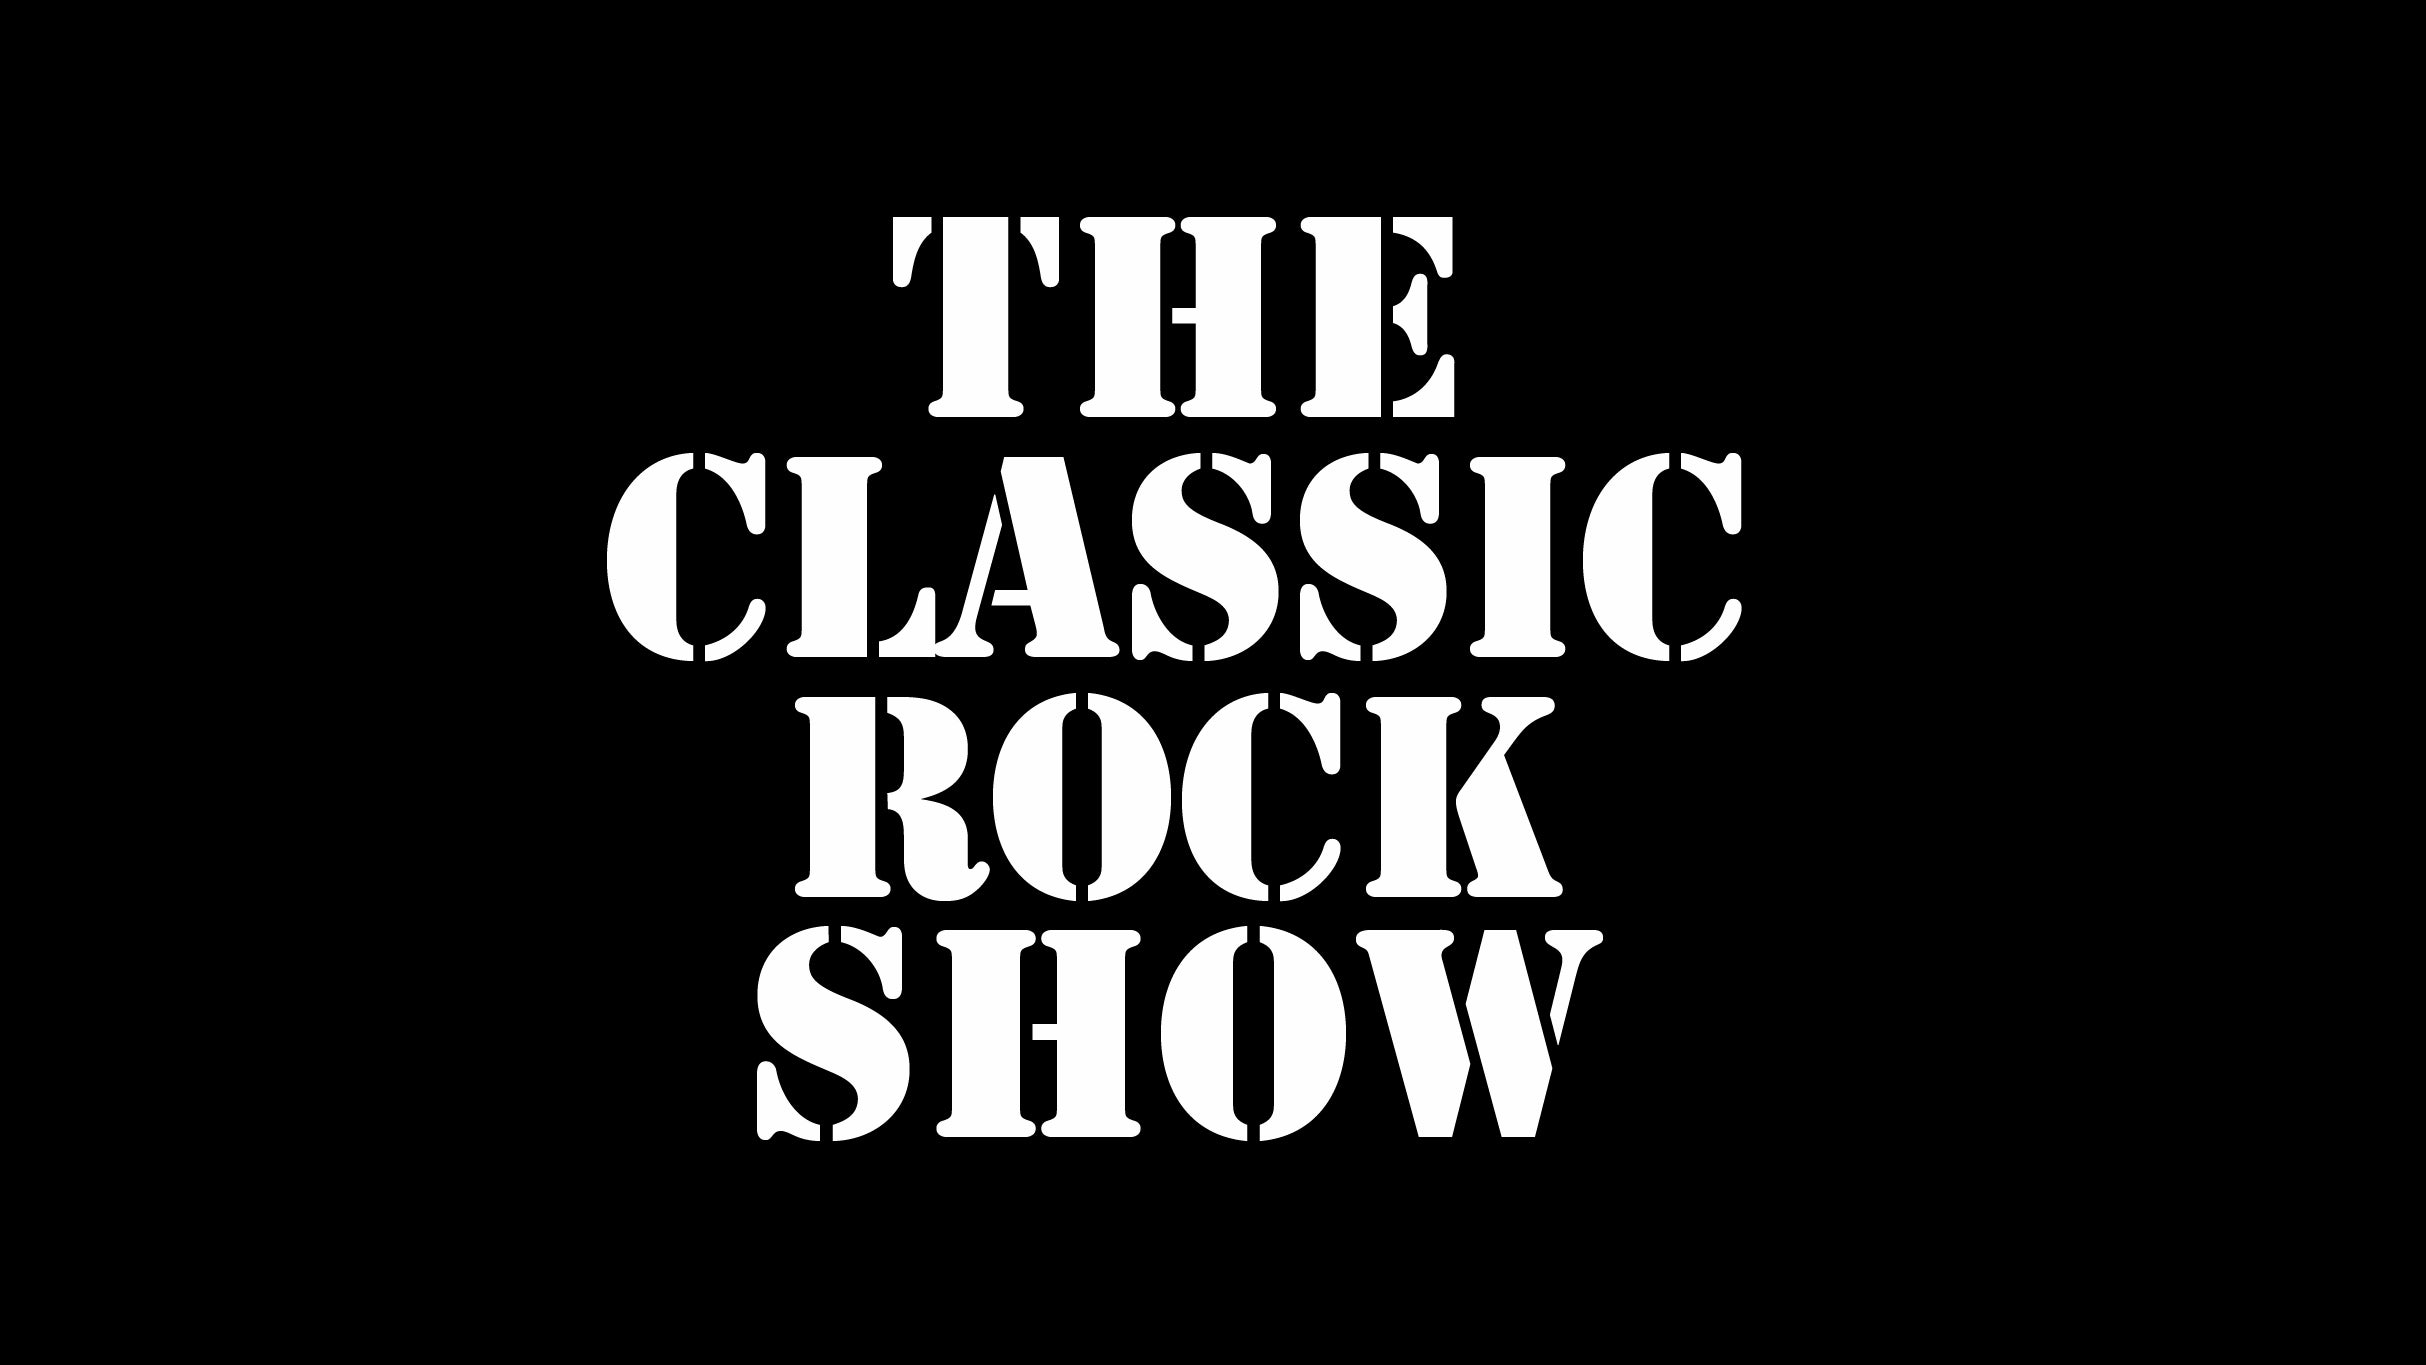 Classic Rock Show in Cincinnati promo photo for Official Platinum presale offer code